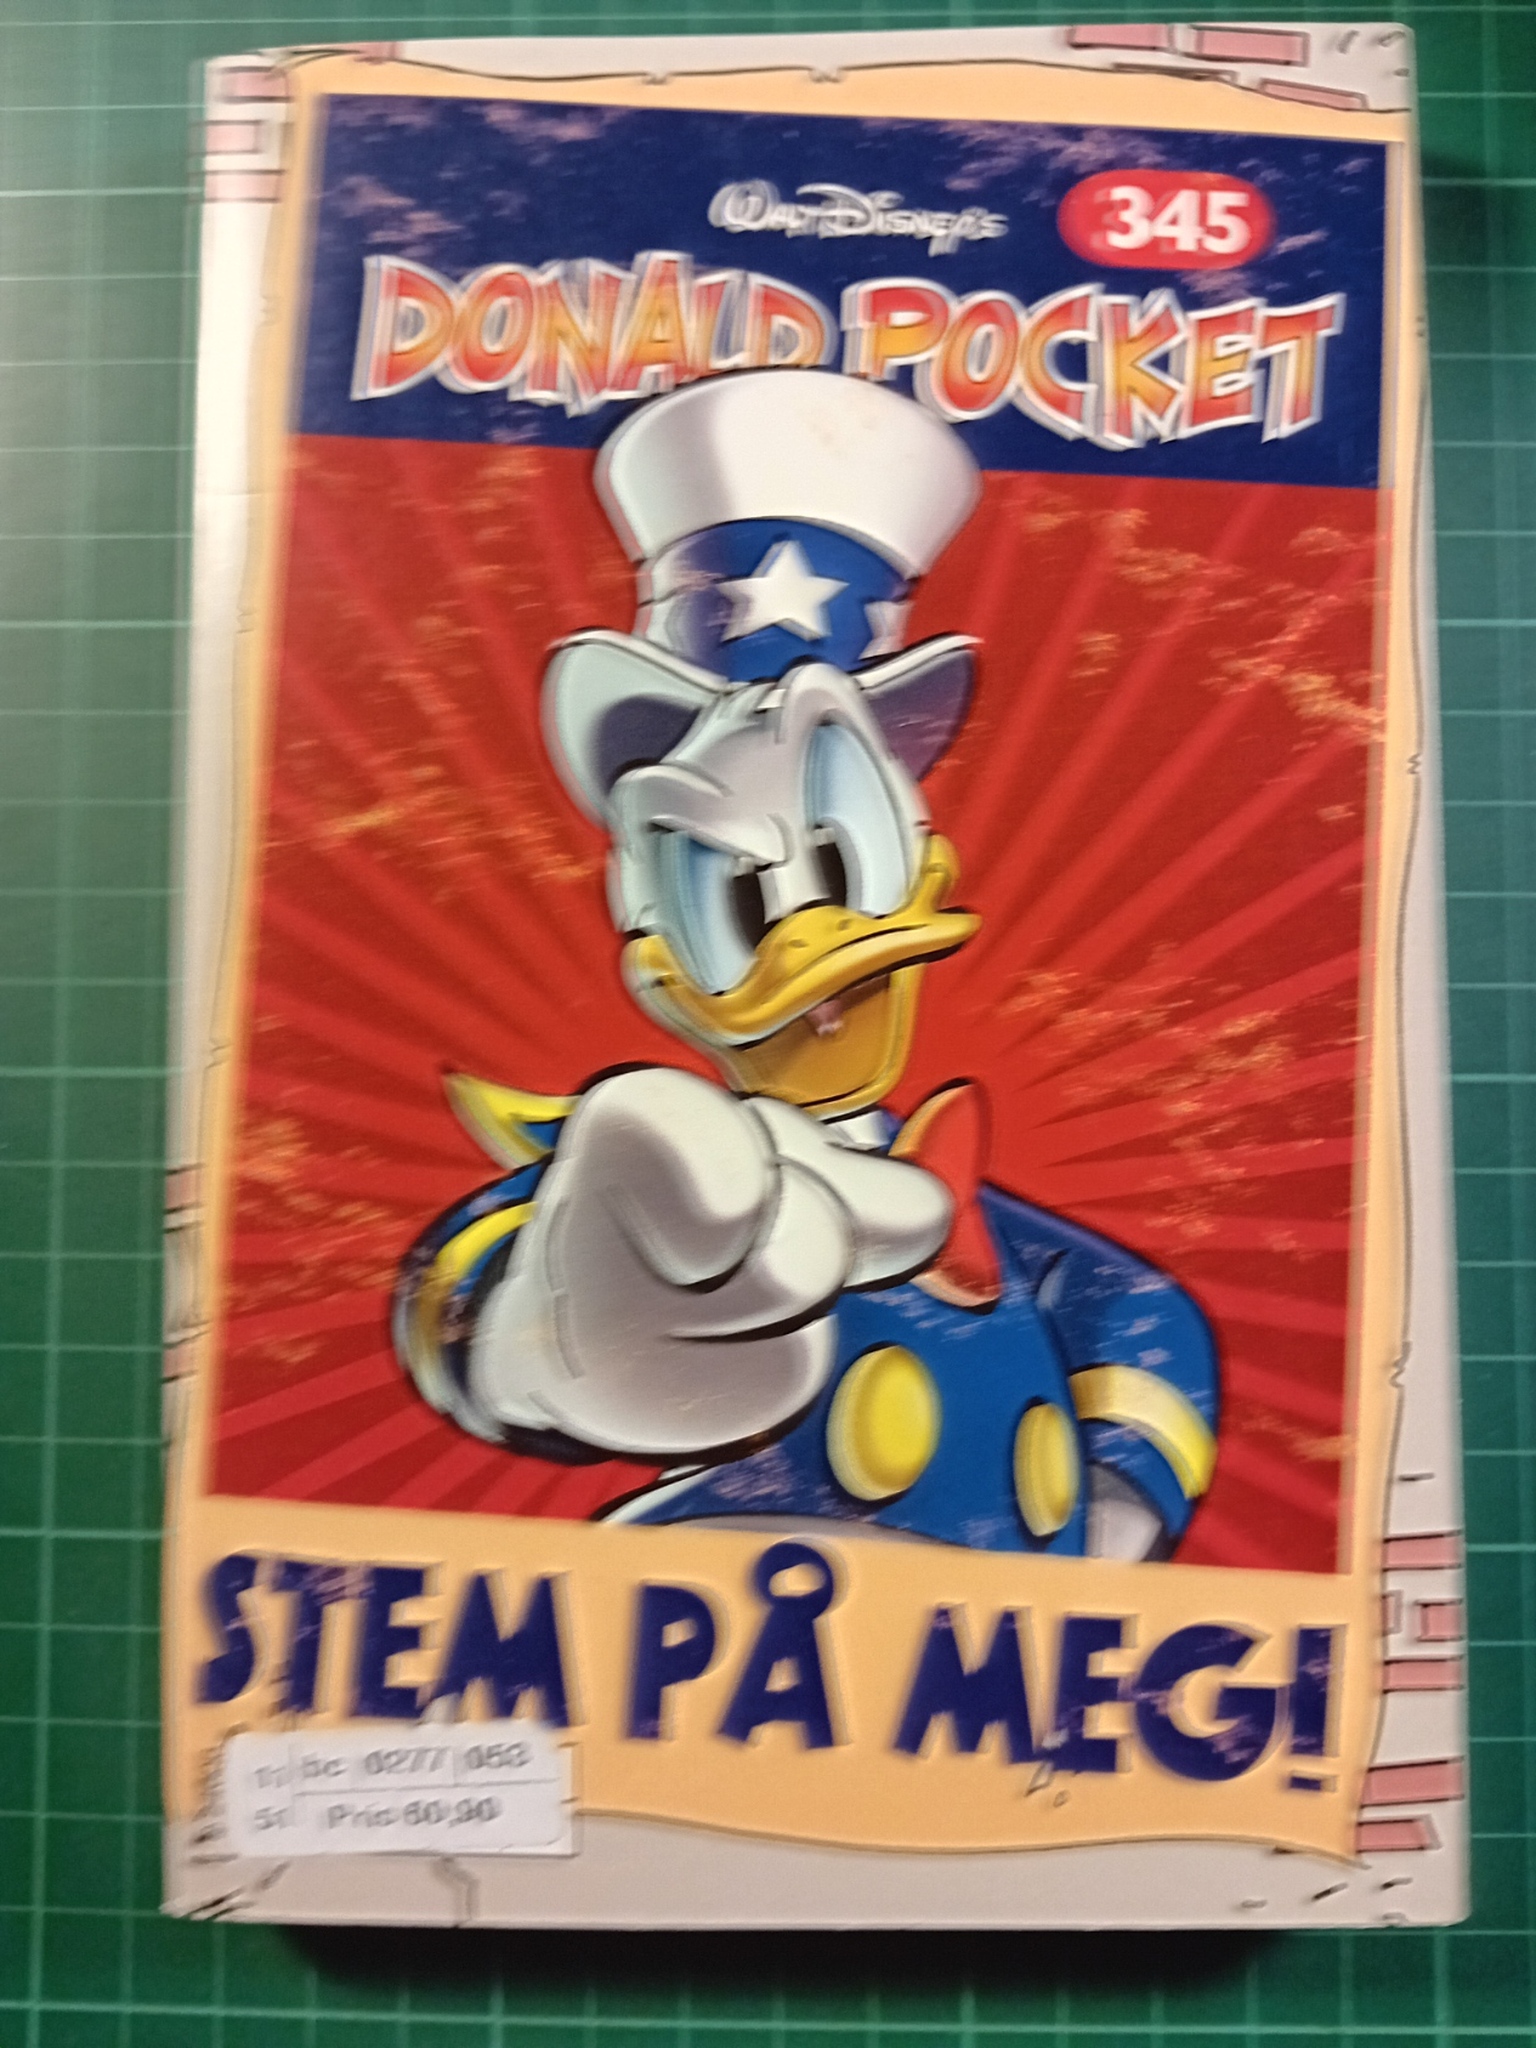 Donald Pocket 345